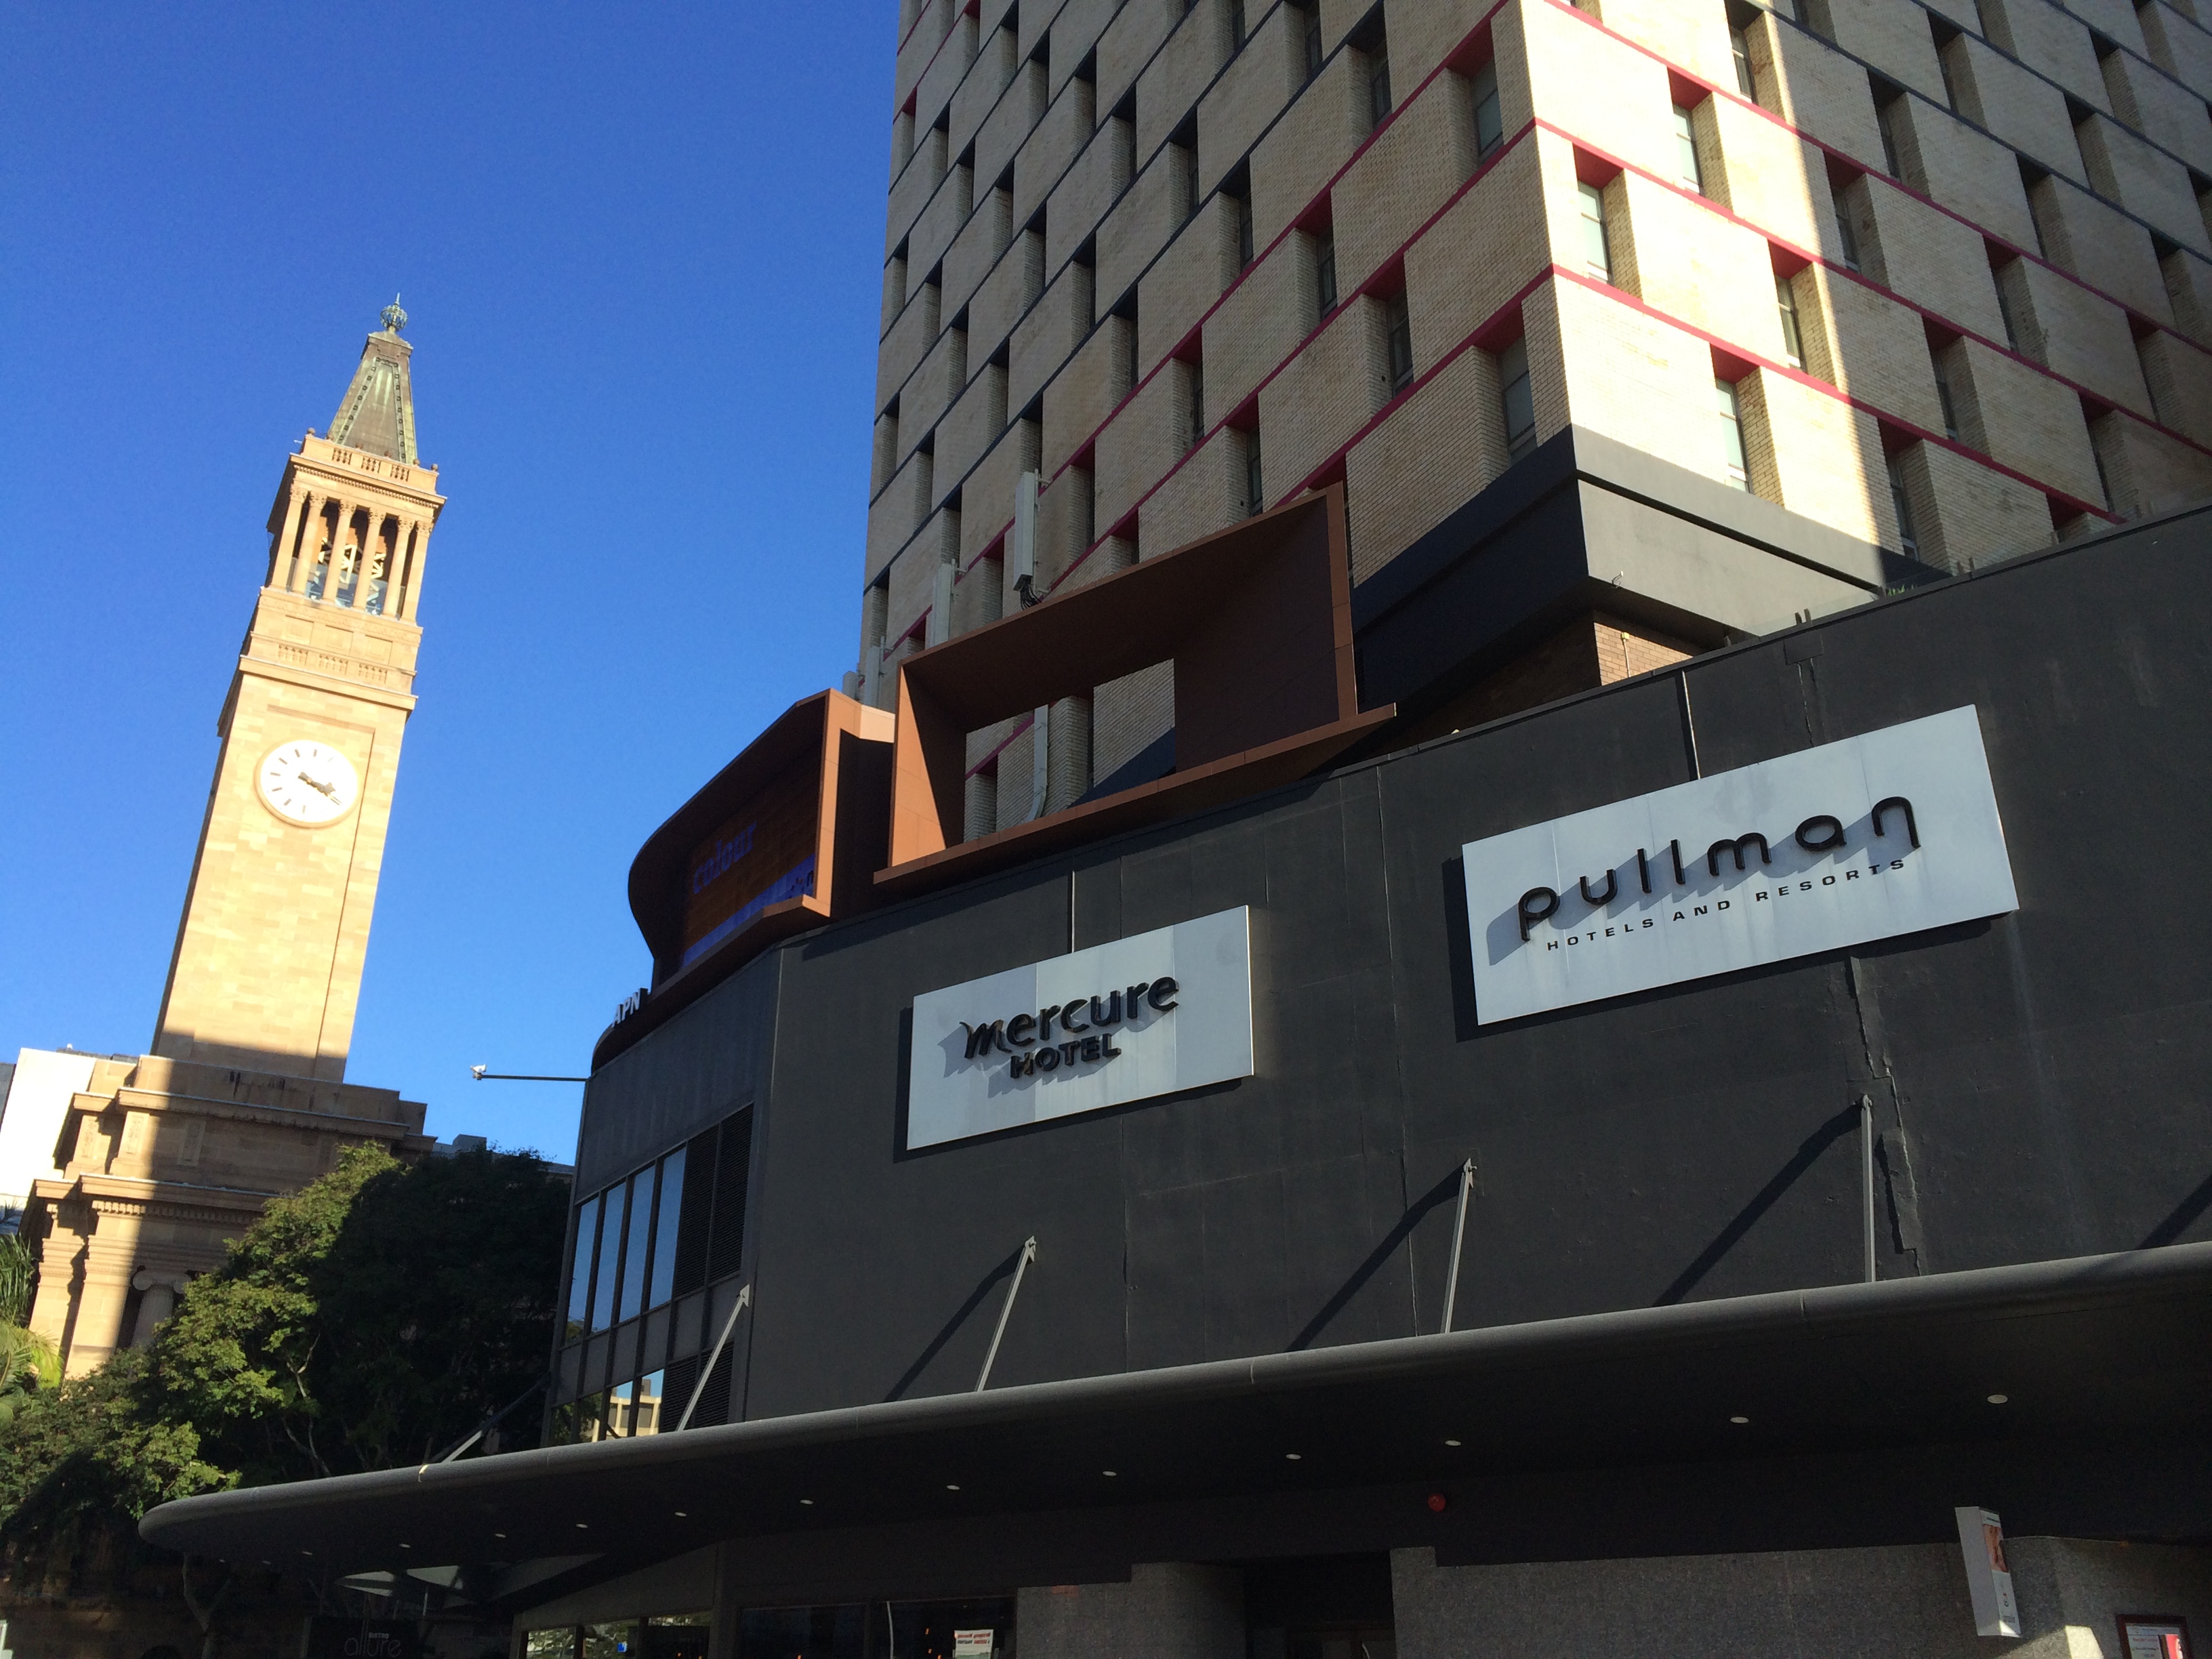 Pullman Brisbane - King George Square, the PyCon AU 2015
venue.